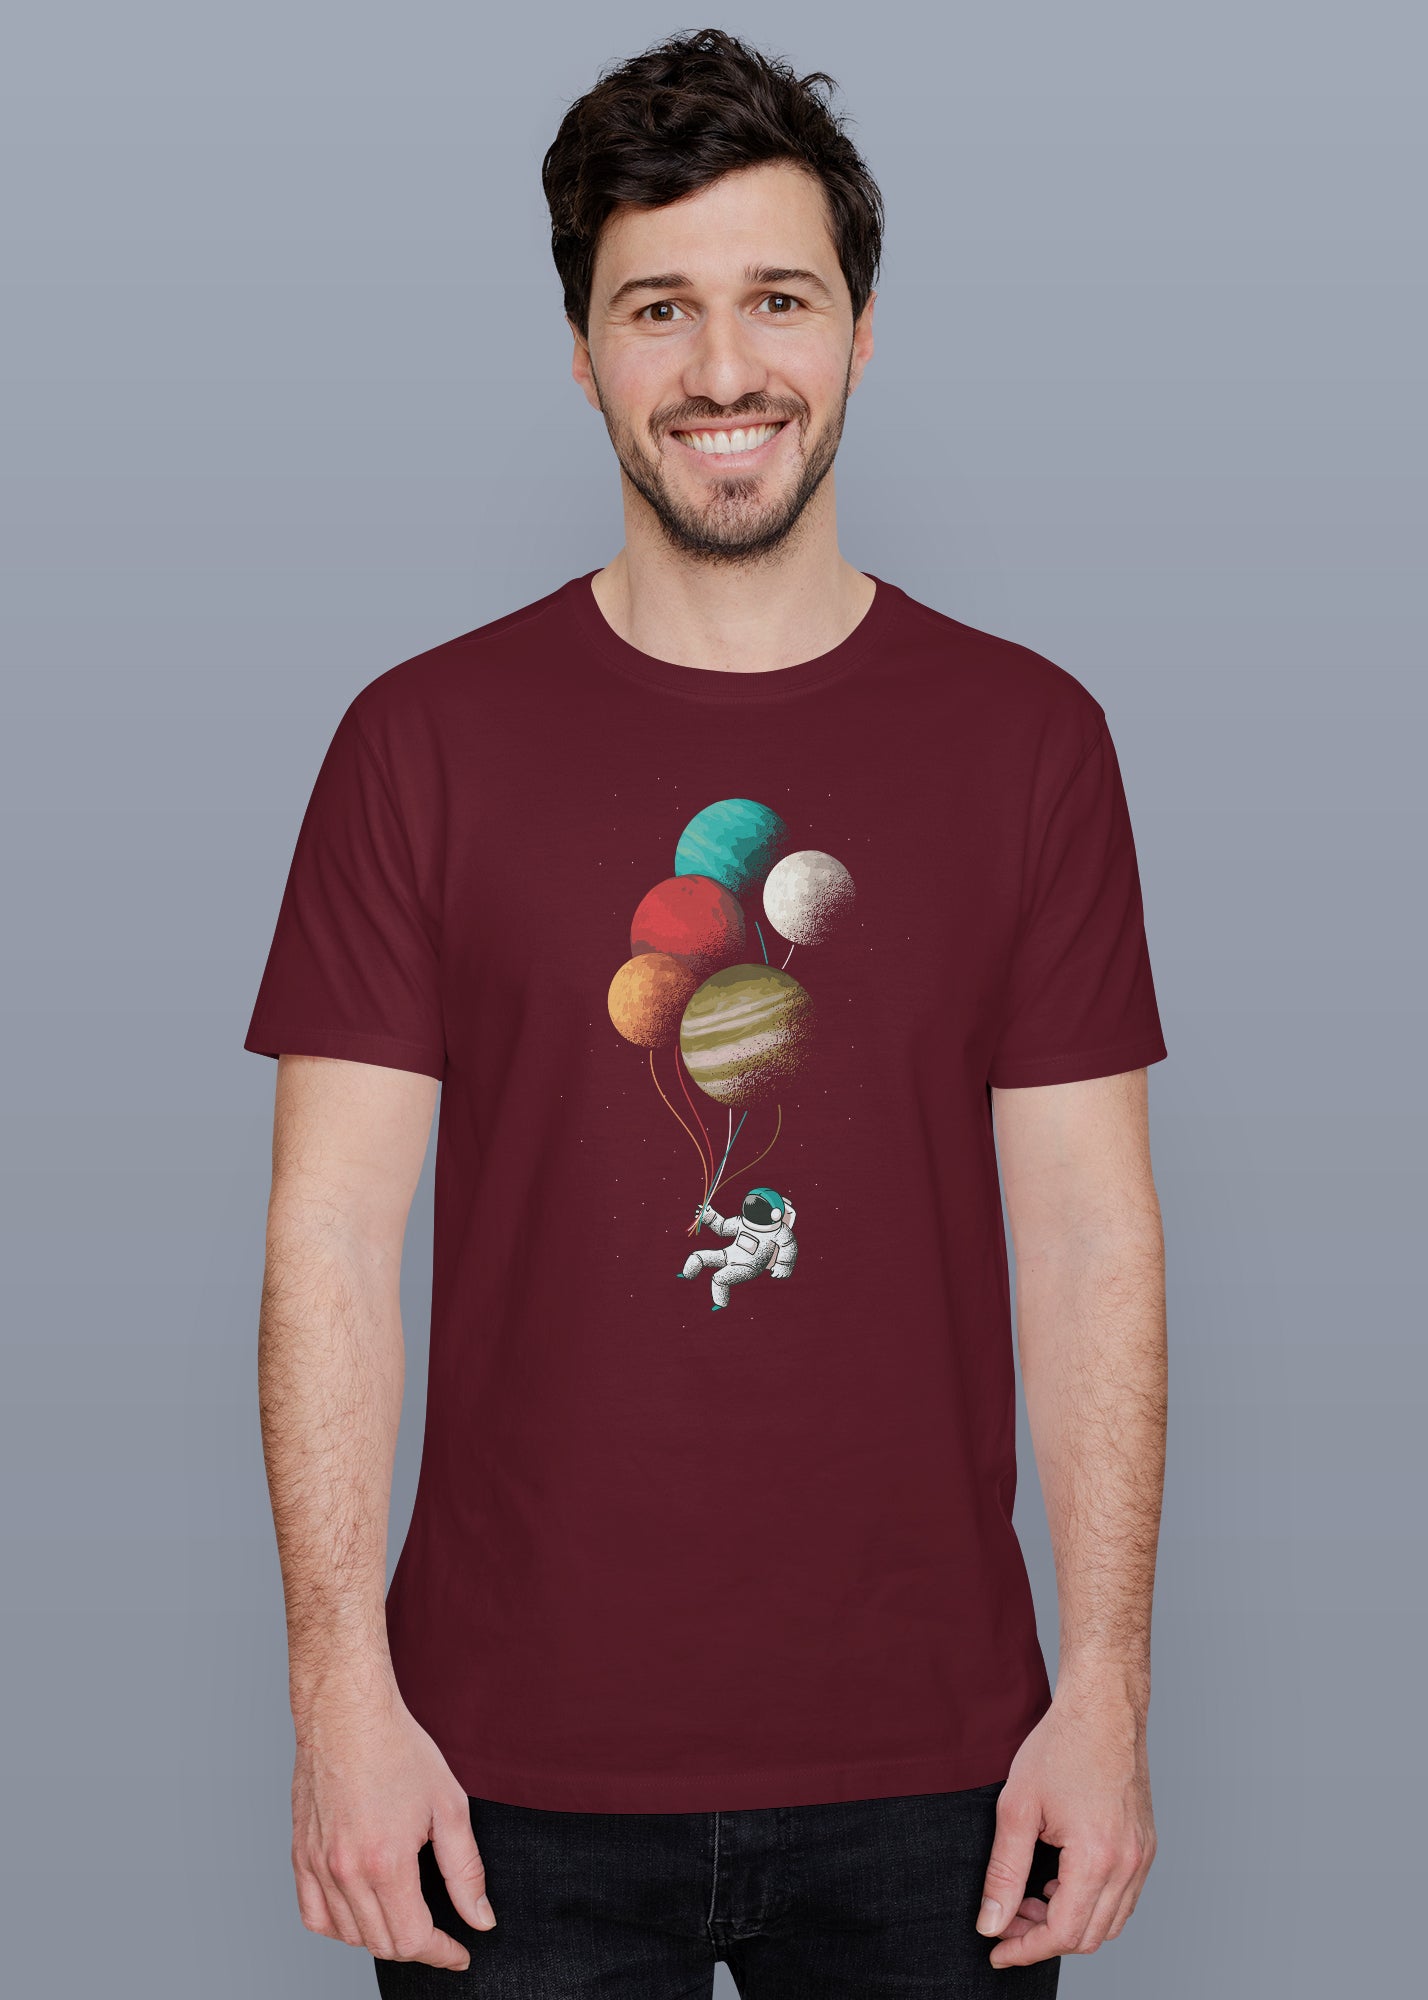 Al Astronaut Balloon Printed Half Sleeve Premium Cotton T-shirt For Men